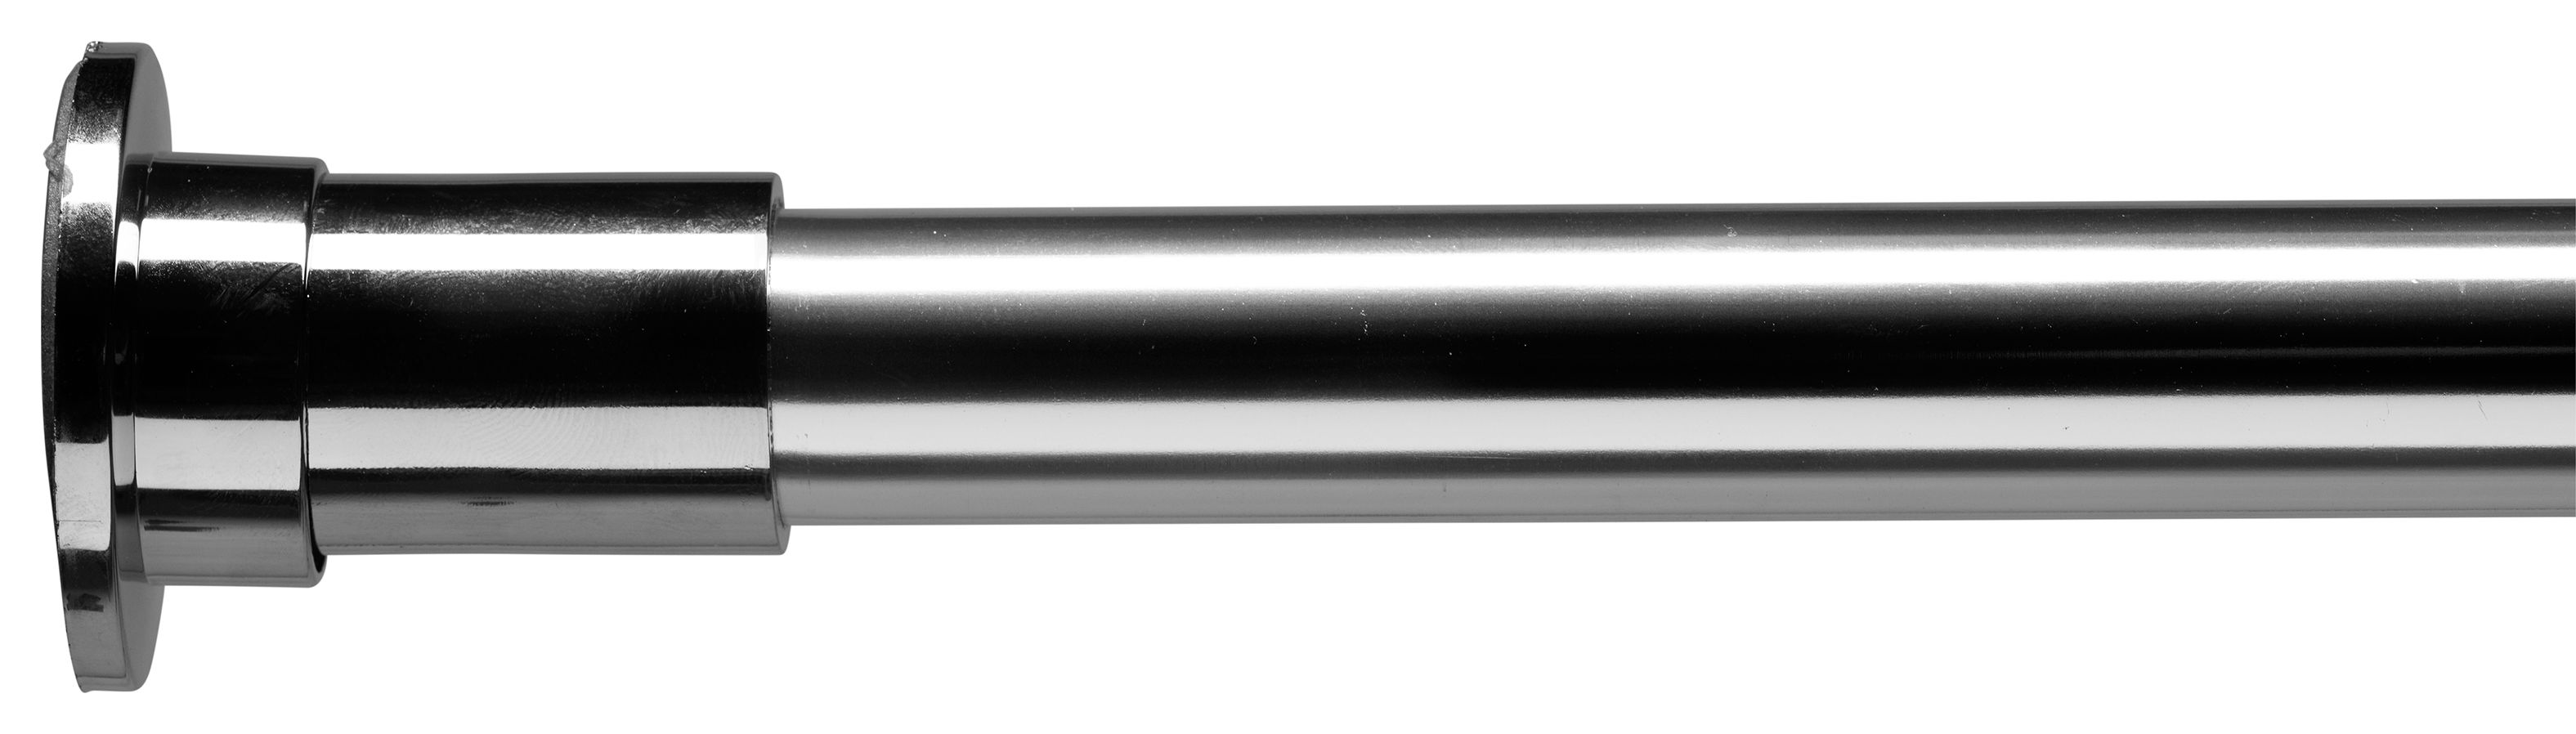 Croydex Stick 'n' Lock Shower Curtain Rod 8ft 6in - Chrome